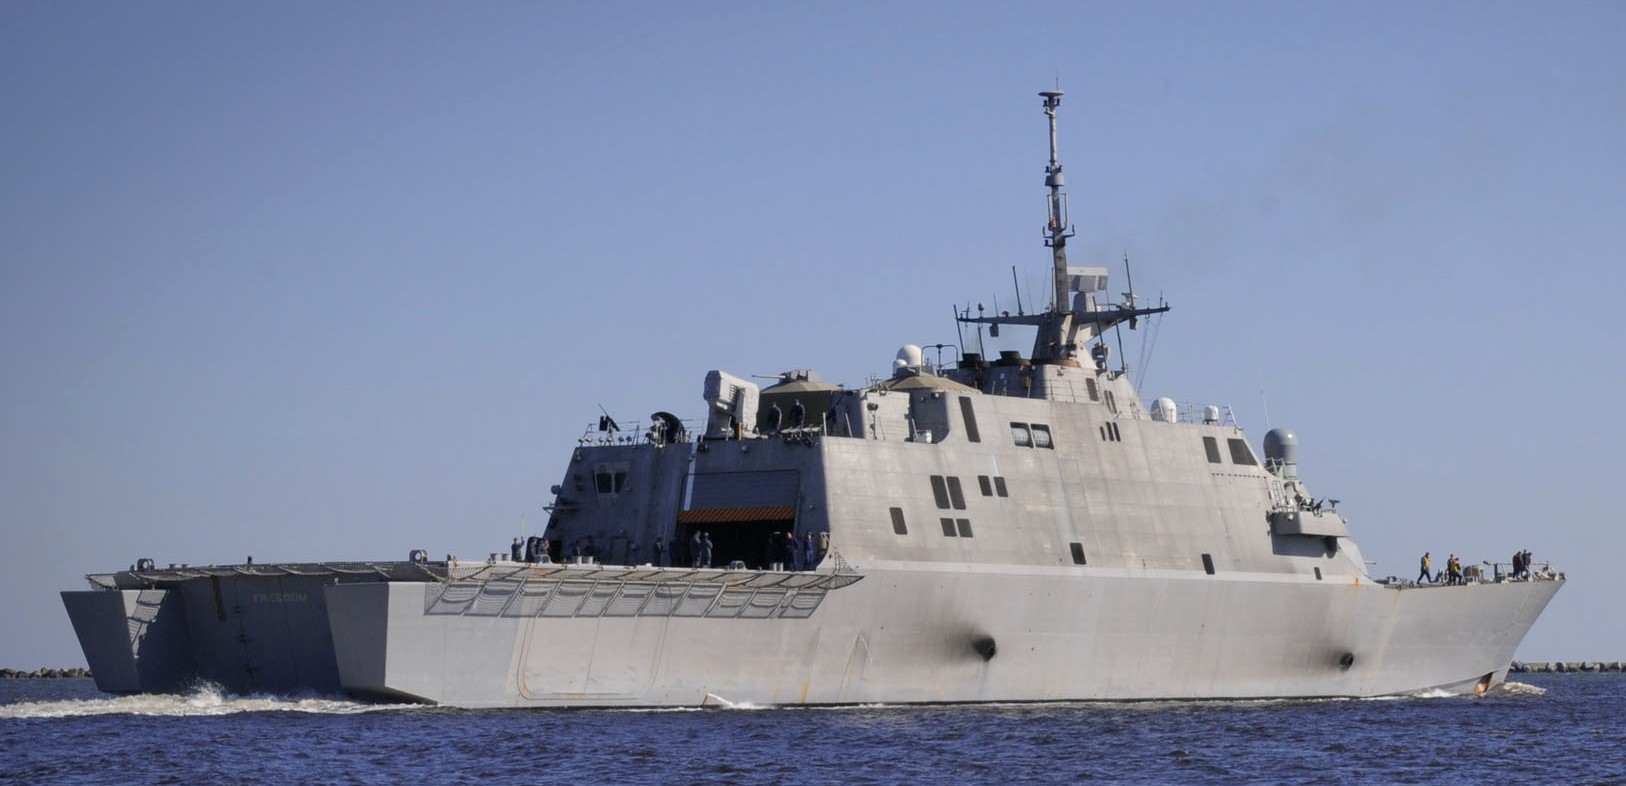 lcs-1 uss freedom class littoral combat ship us navy 94 mayport florida